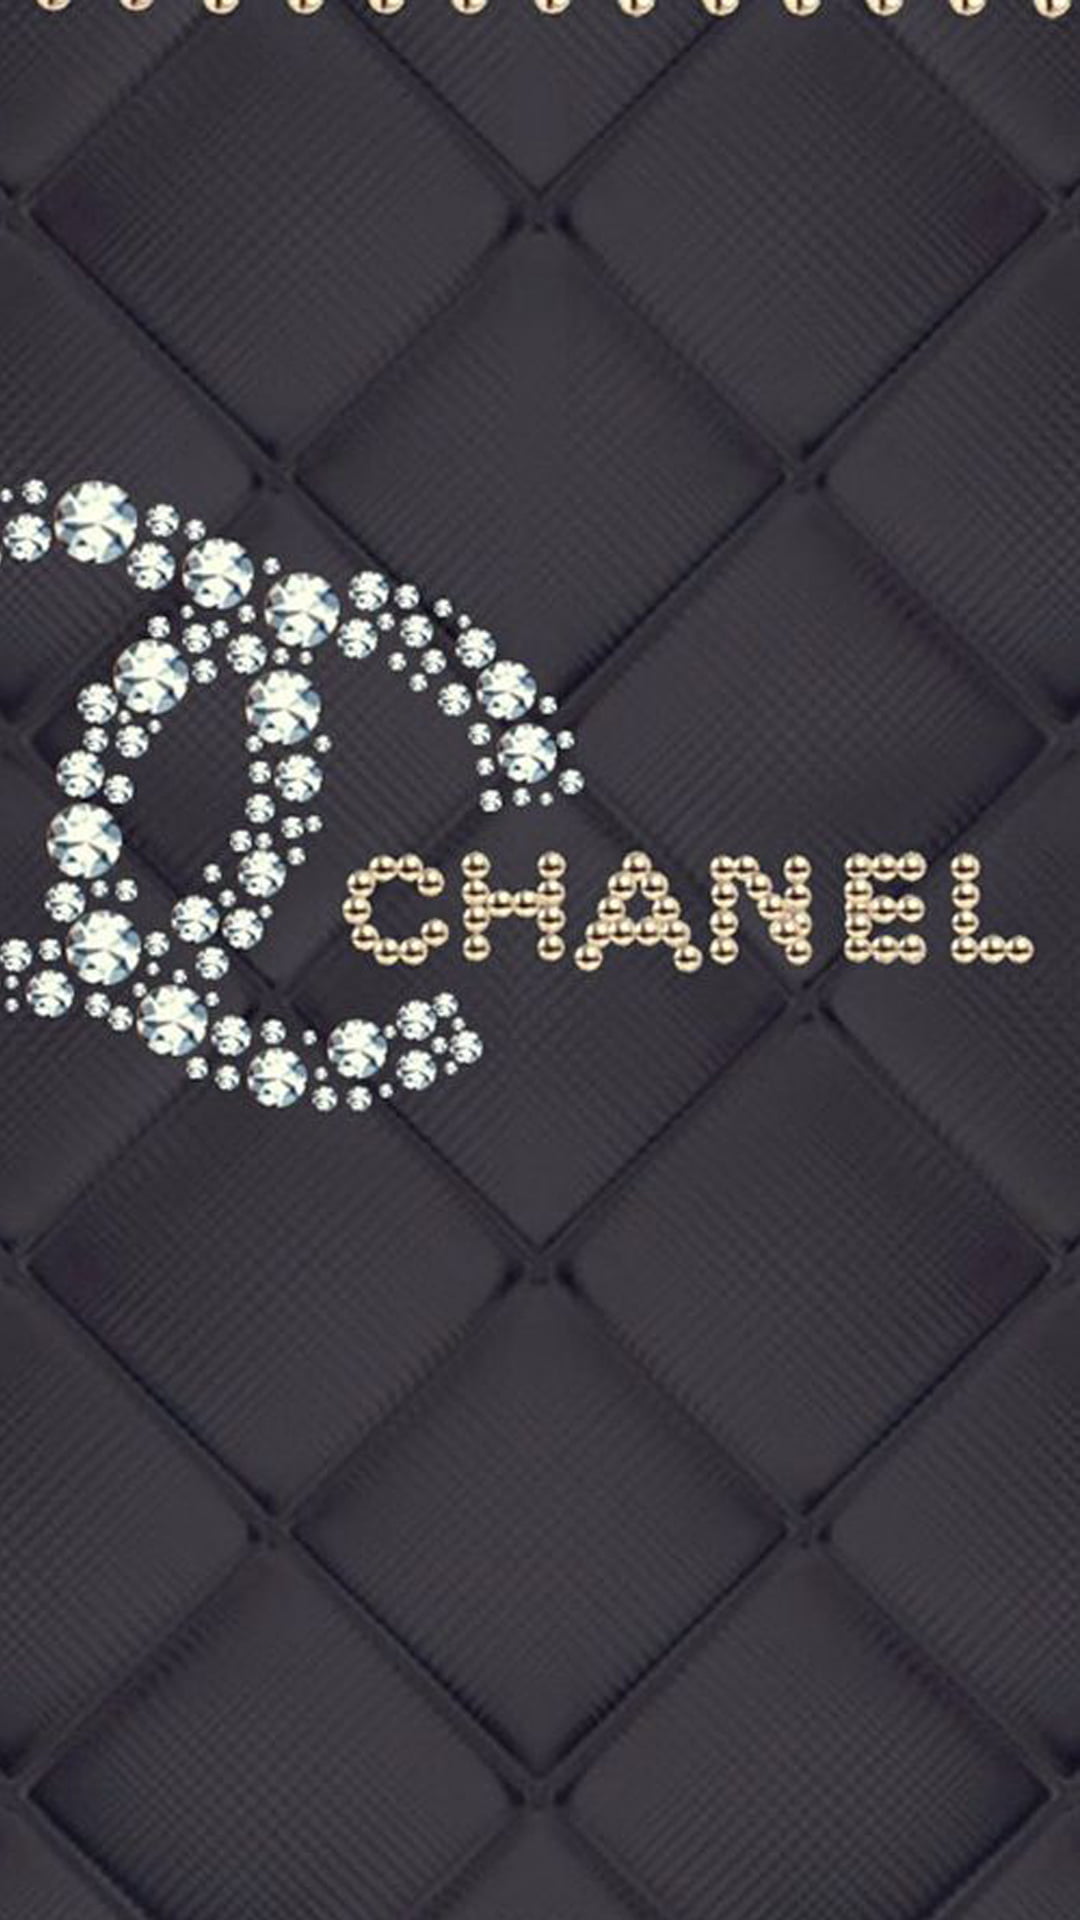 Chanel シャネル Iphone Wallpapers